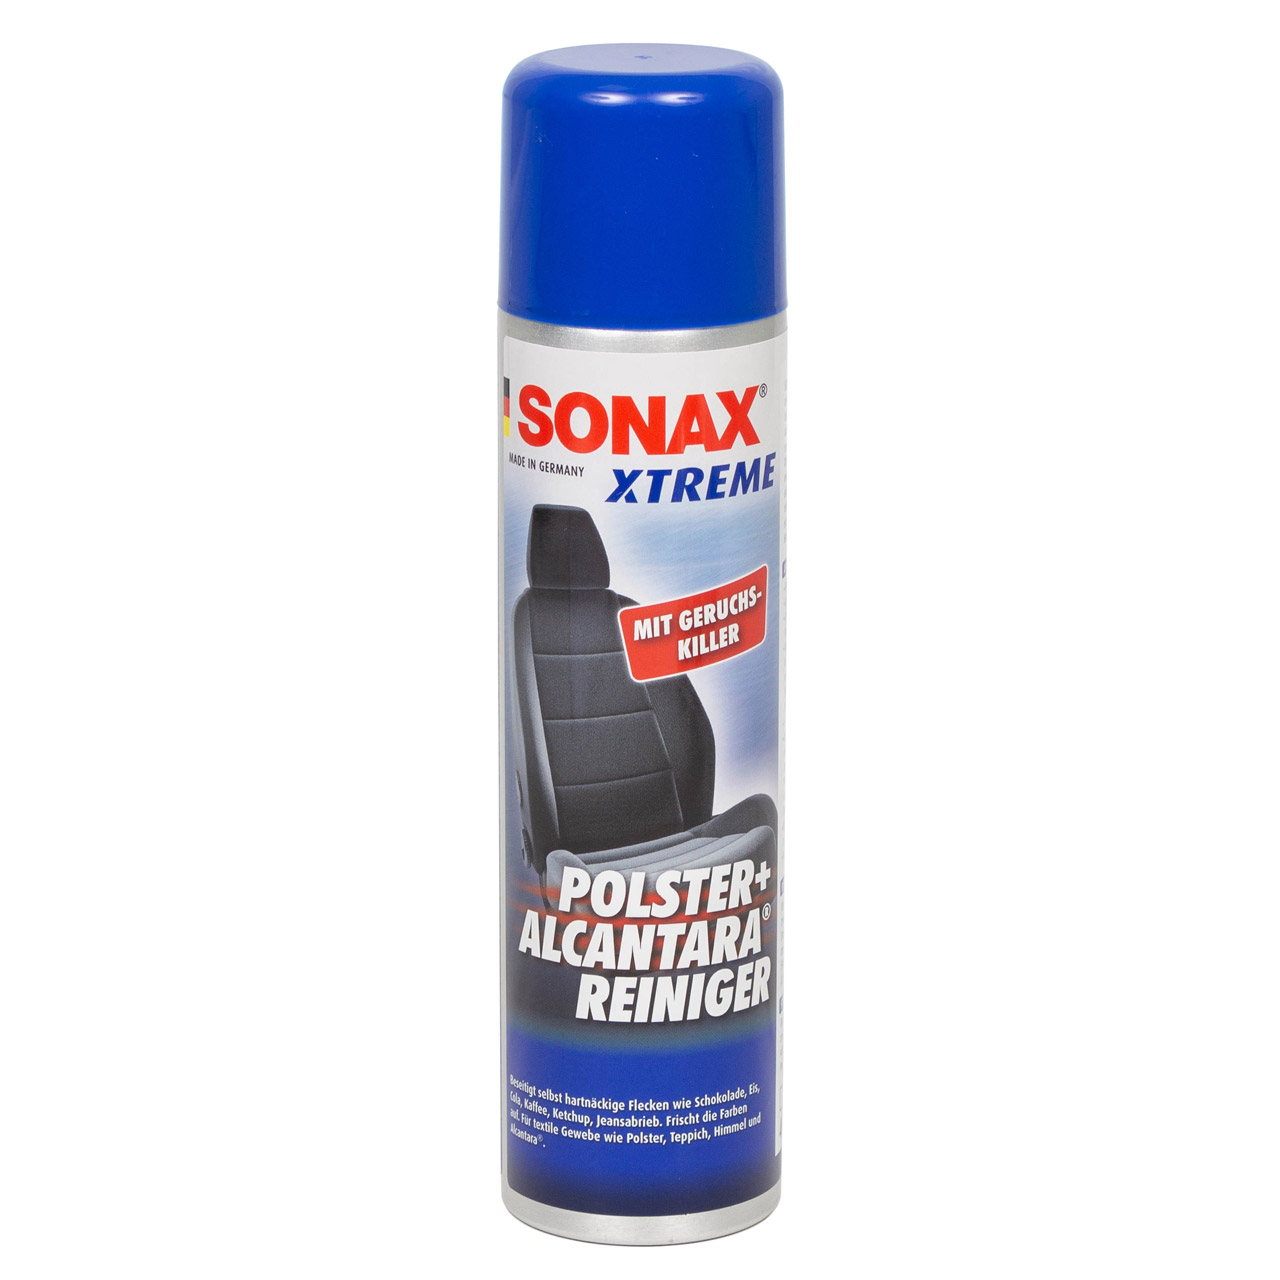 Sonax Xtreme Upholstery & Alcantara Cleaner - Limpieza de